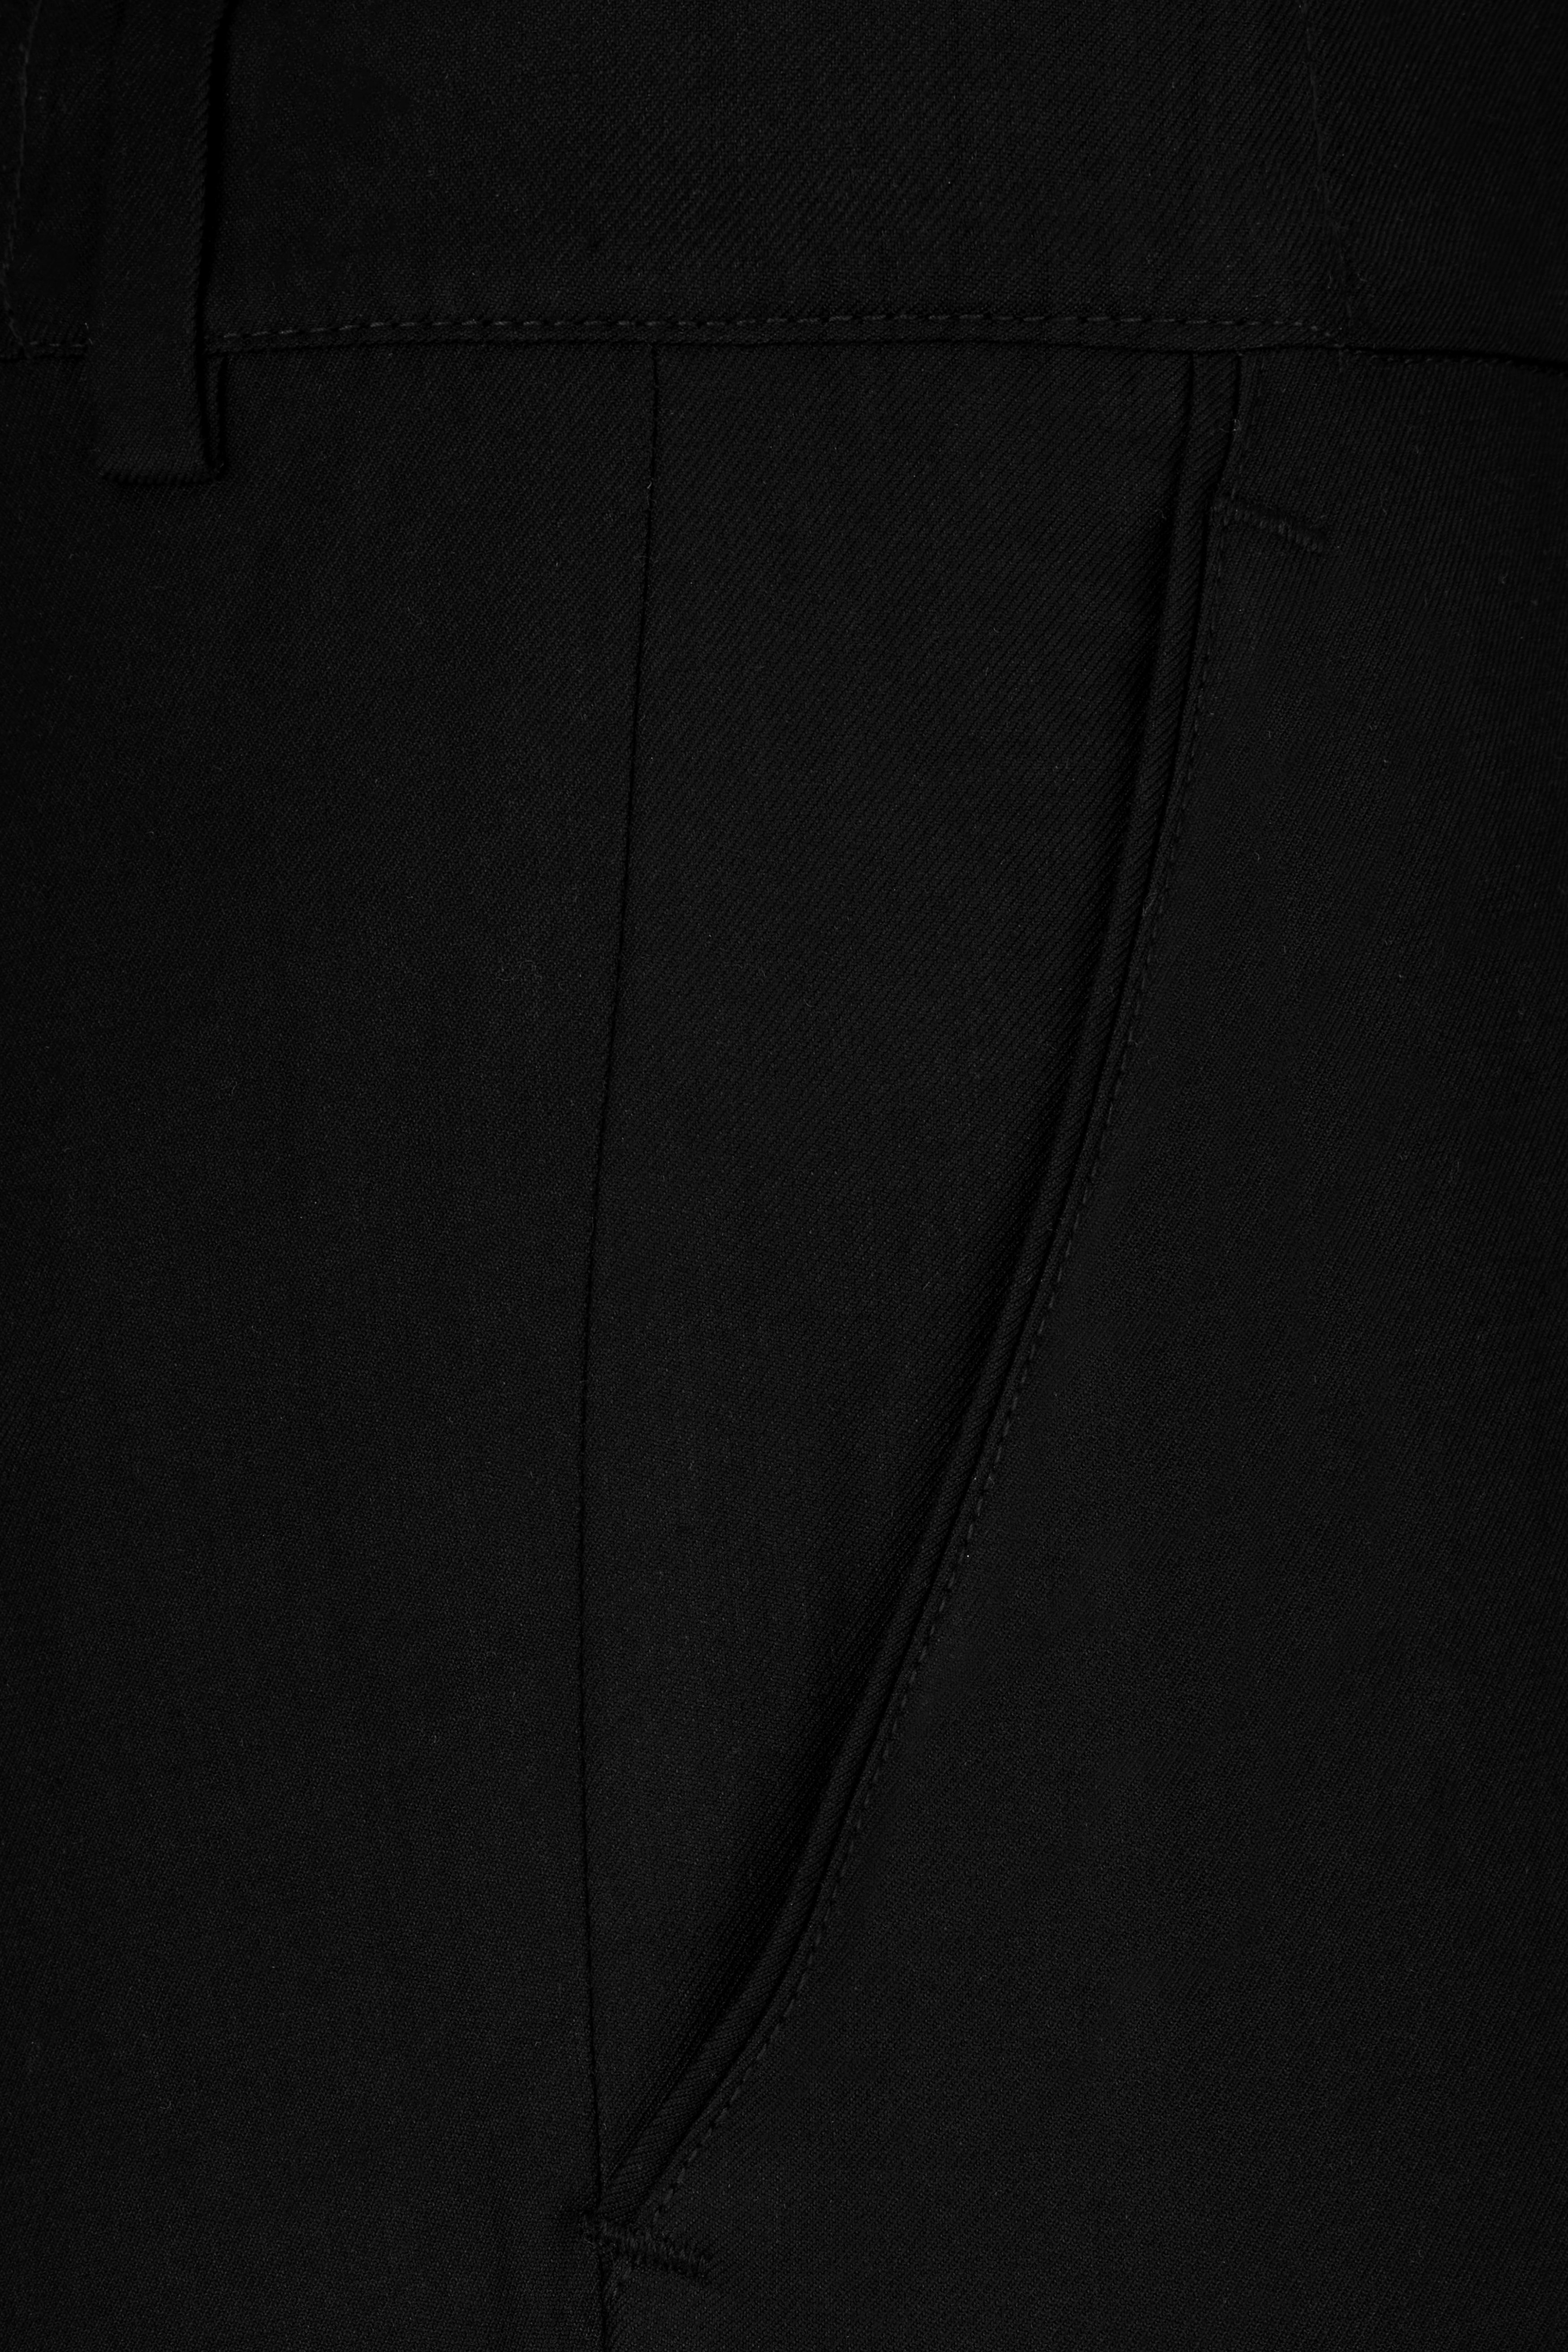 Jade Black Stone Work Wool Rich Bandhgala Designer Suit ST2874-BG-D479-36, ST2874-BG-D479-38, ST2874-BG-D479-40, ST2874-BG-D479-42, ST2874-BG-D479-44, ST2874-BG-D479-46, ST2874-BG-D479-48, ST2874-BG-D479-50, ST2874-BG-D479-52, ST2874-BG-D479-54, ST2874-BG-D479-56, ST2874-BG-D479-58, ST2874-BG-D479-60